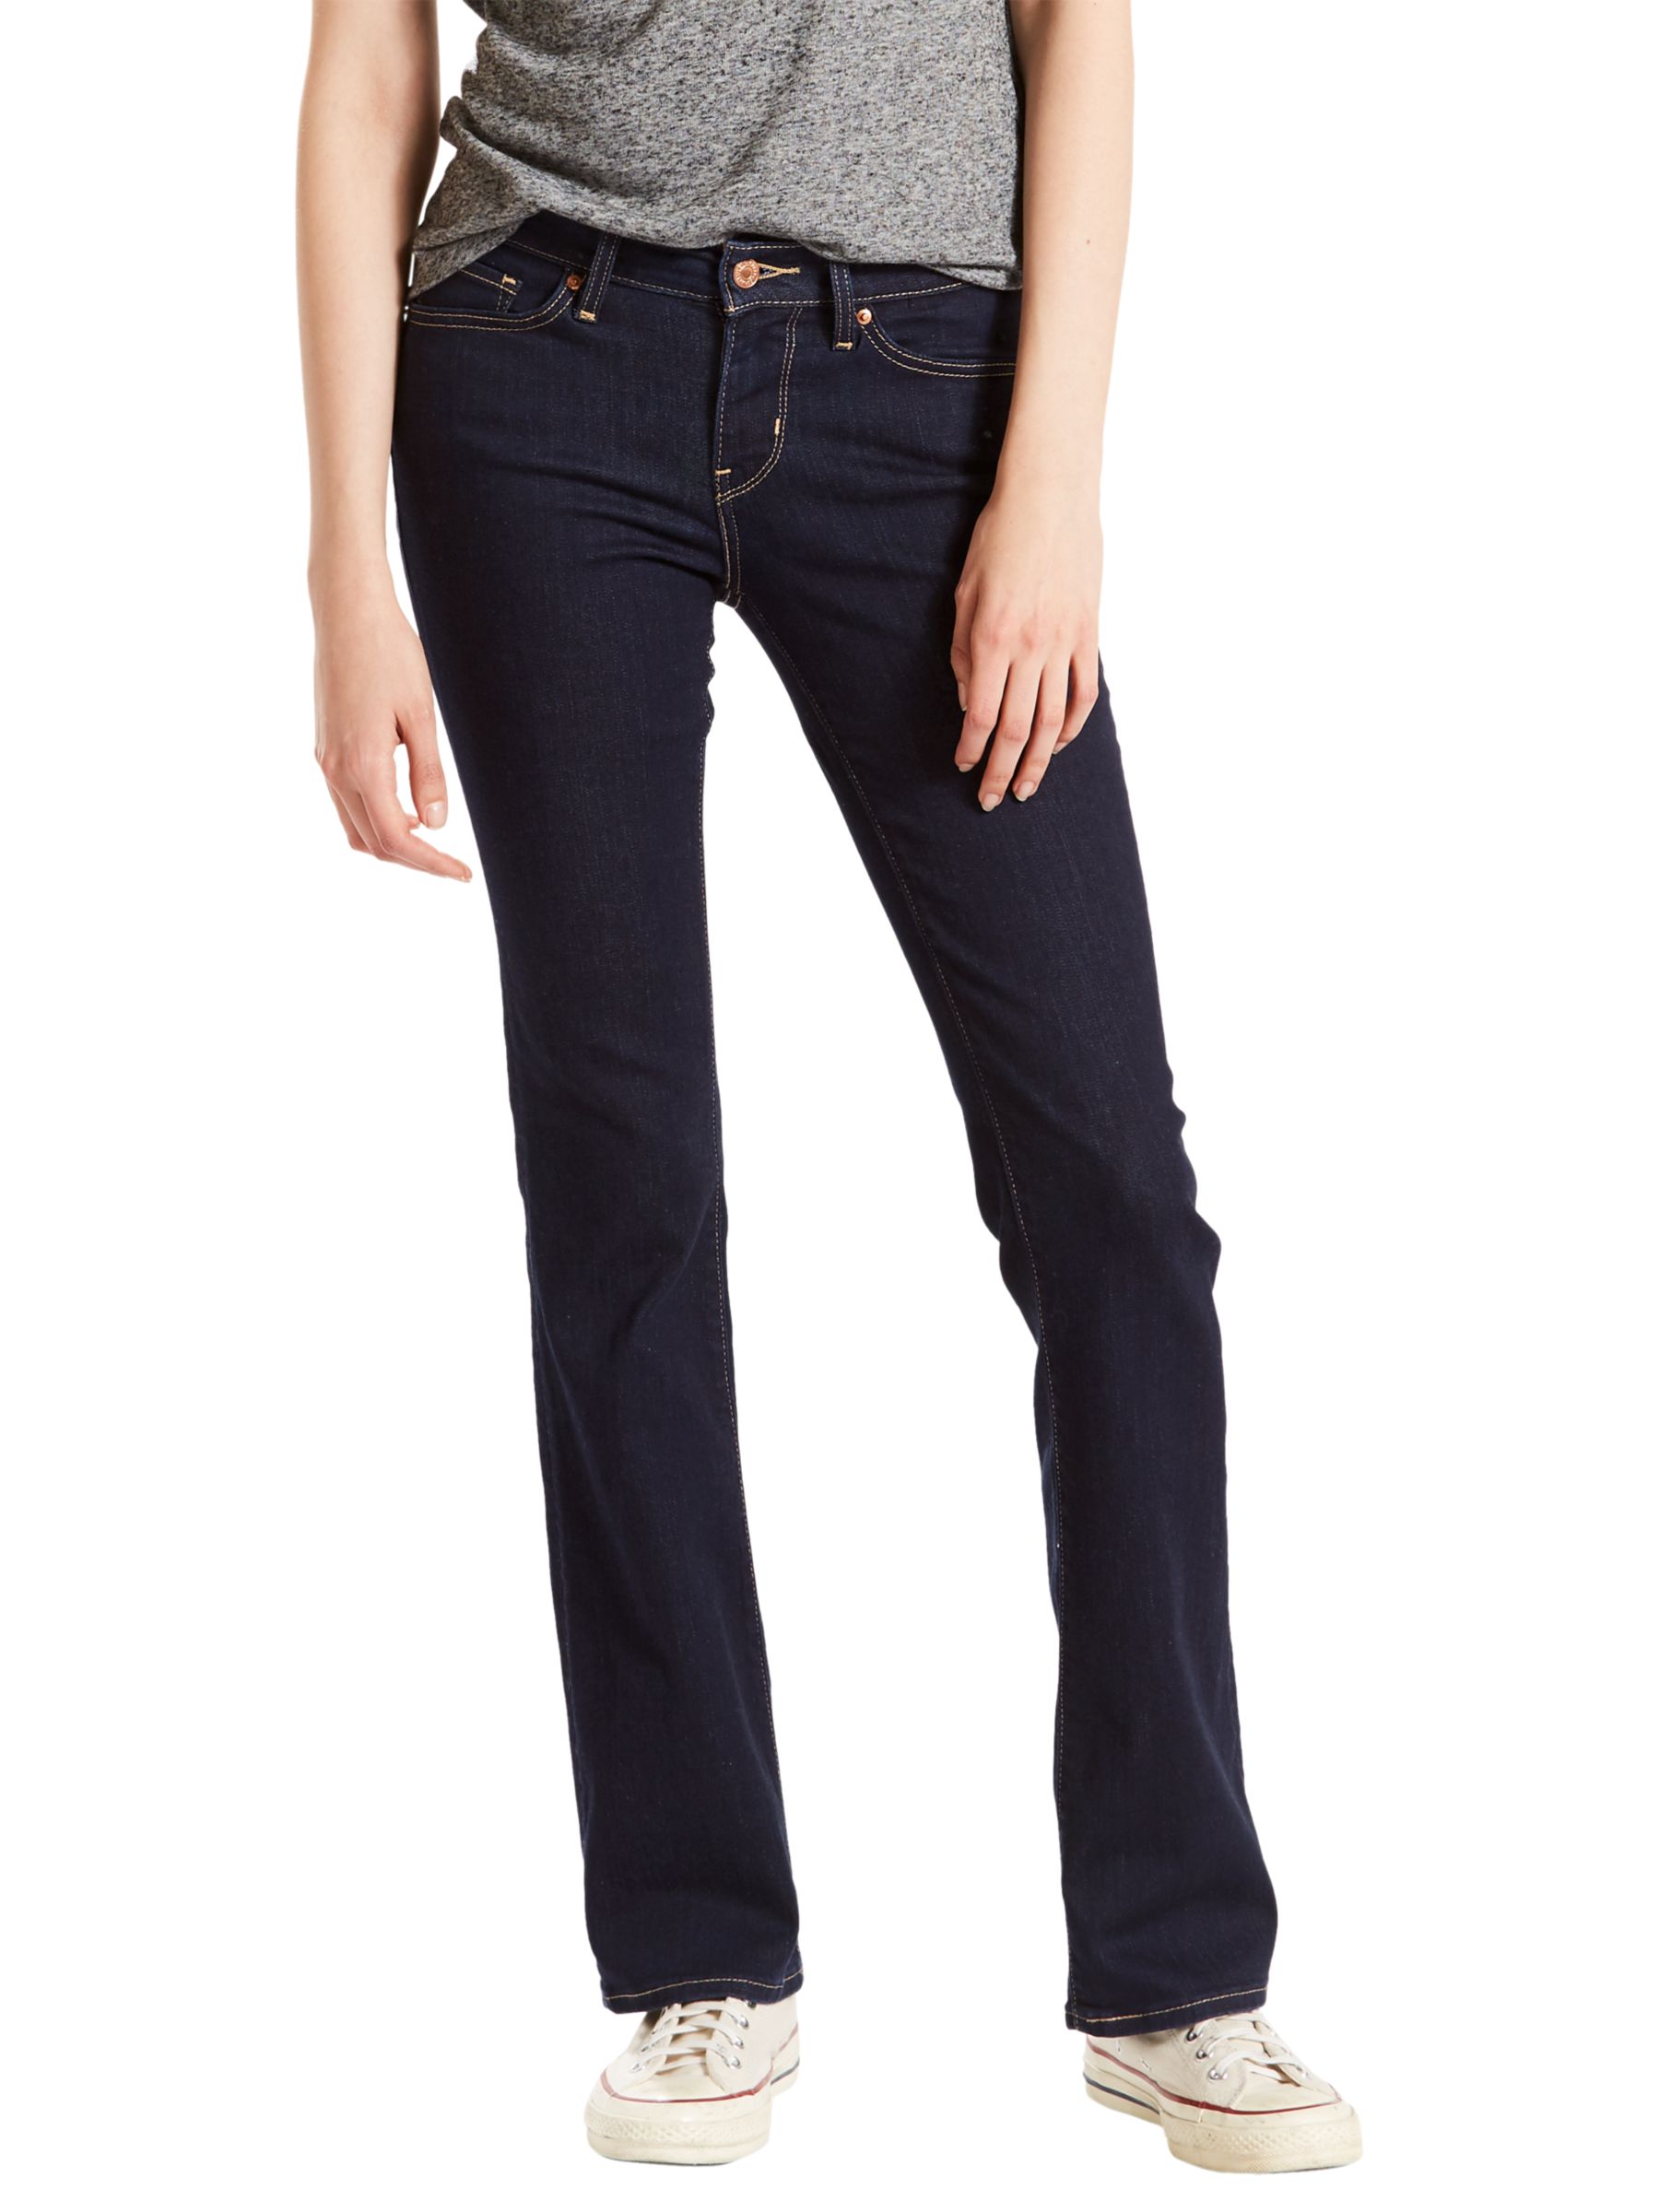 levi 715 women's jeans